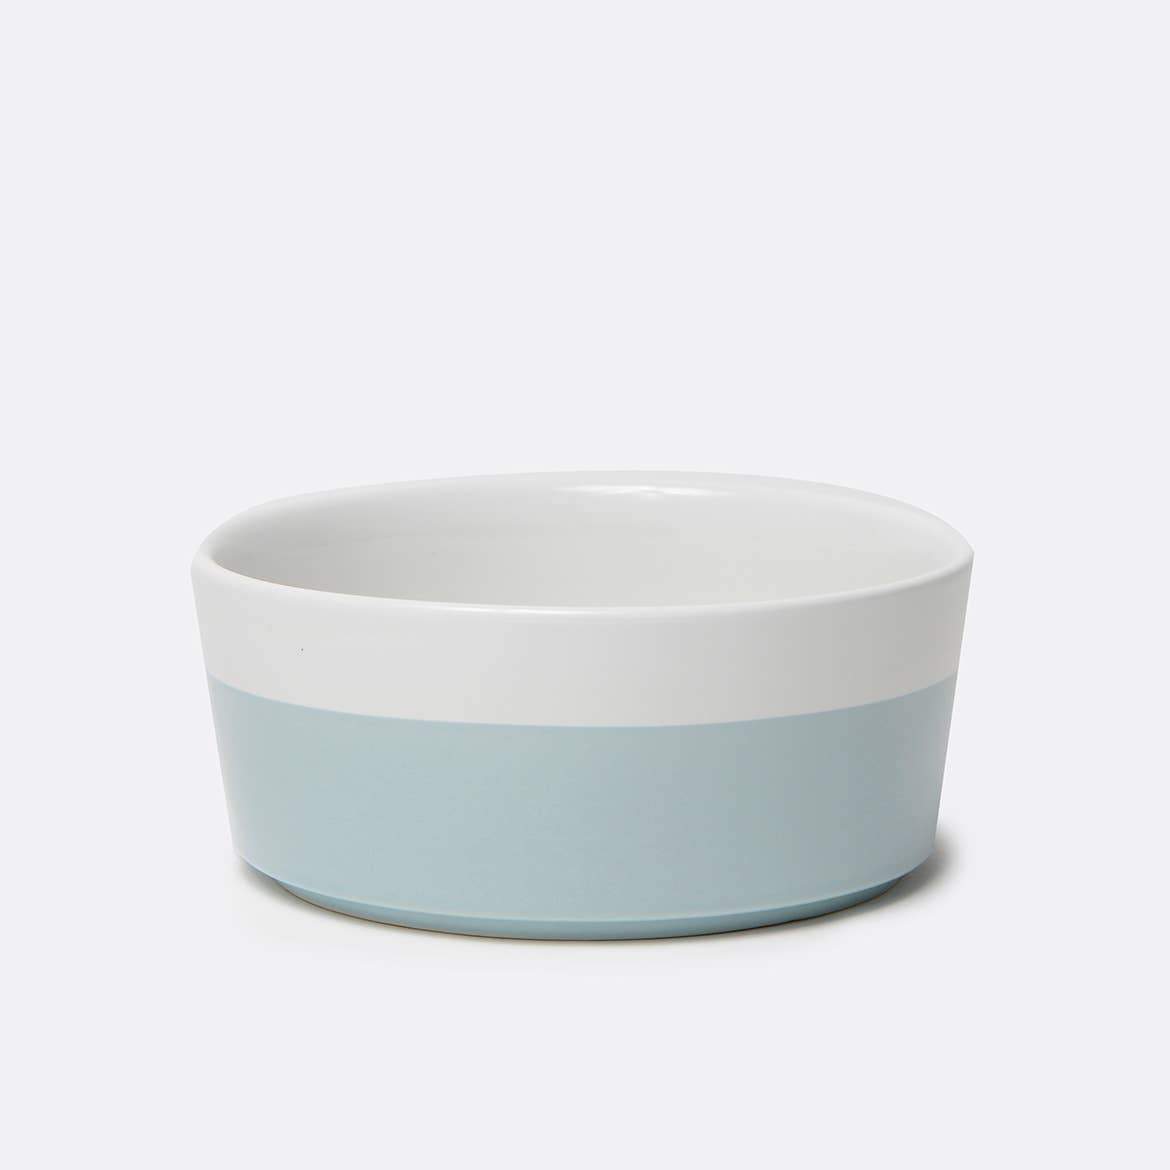 blue ceramic dog bowl